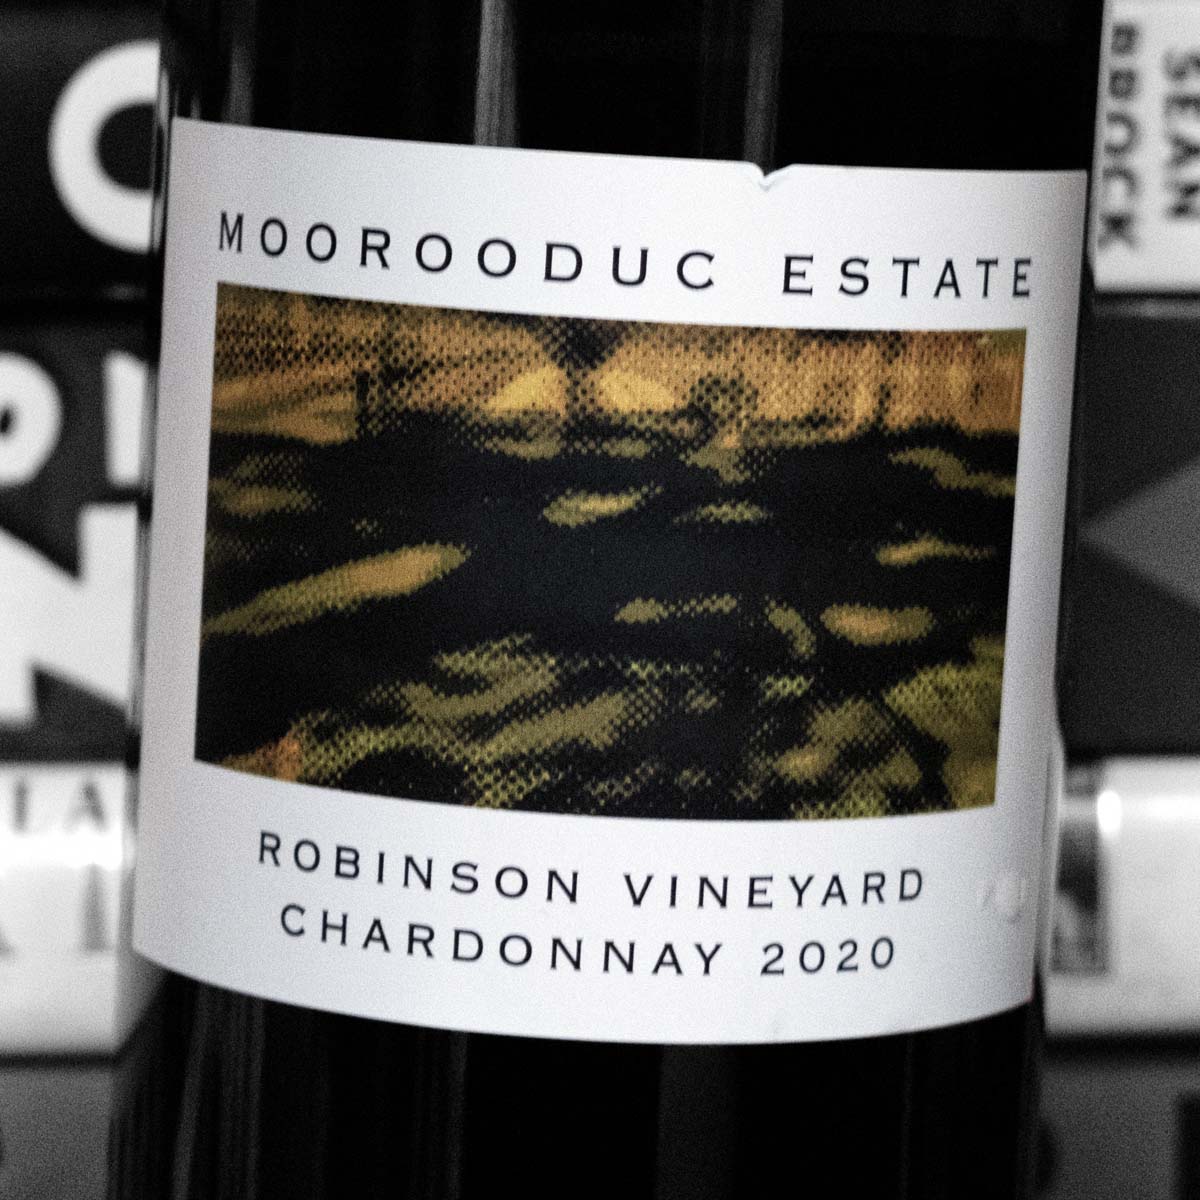 Moorooduc Estate Robinson Vineyard Chardonnay 2020 Mornington Peninsula, Victoria